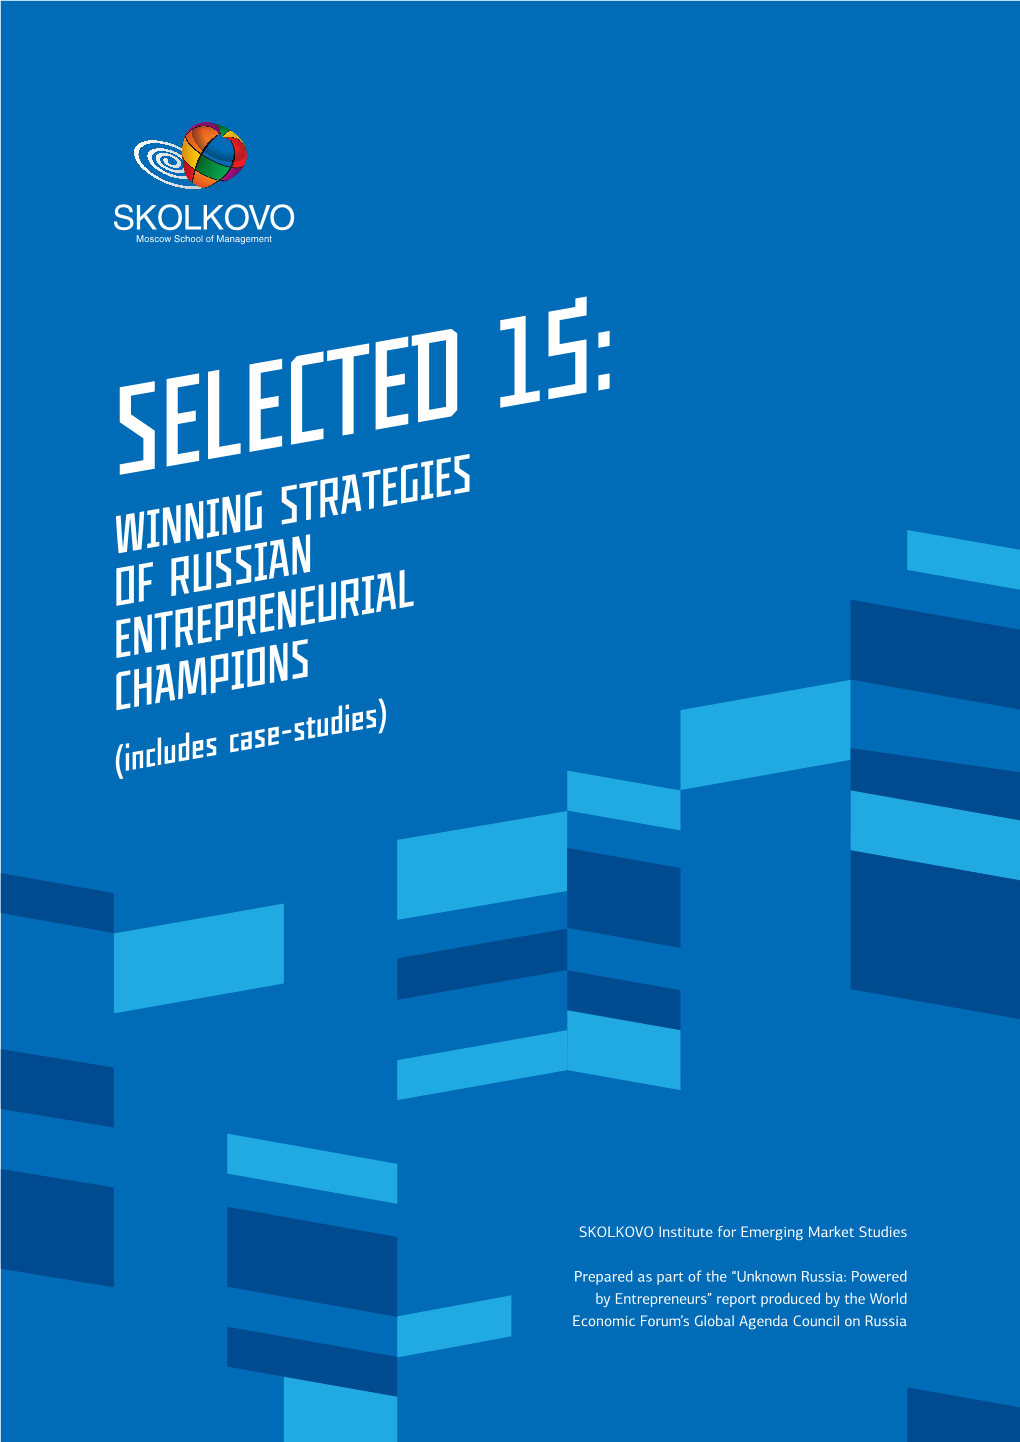 Winning Strategies of Russian Entrepreneurial Champions (Includes Сase-Studies)